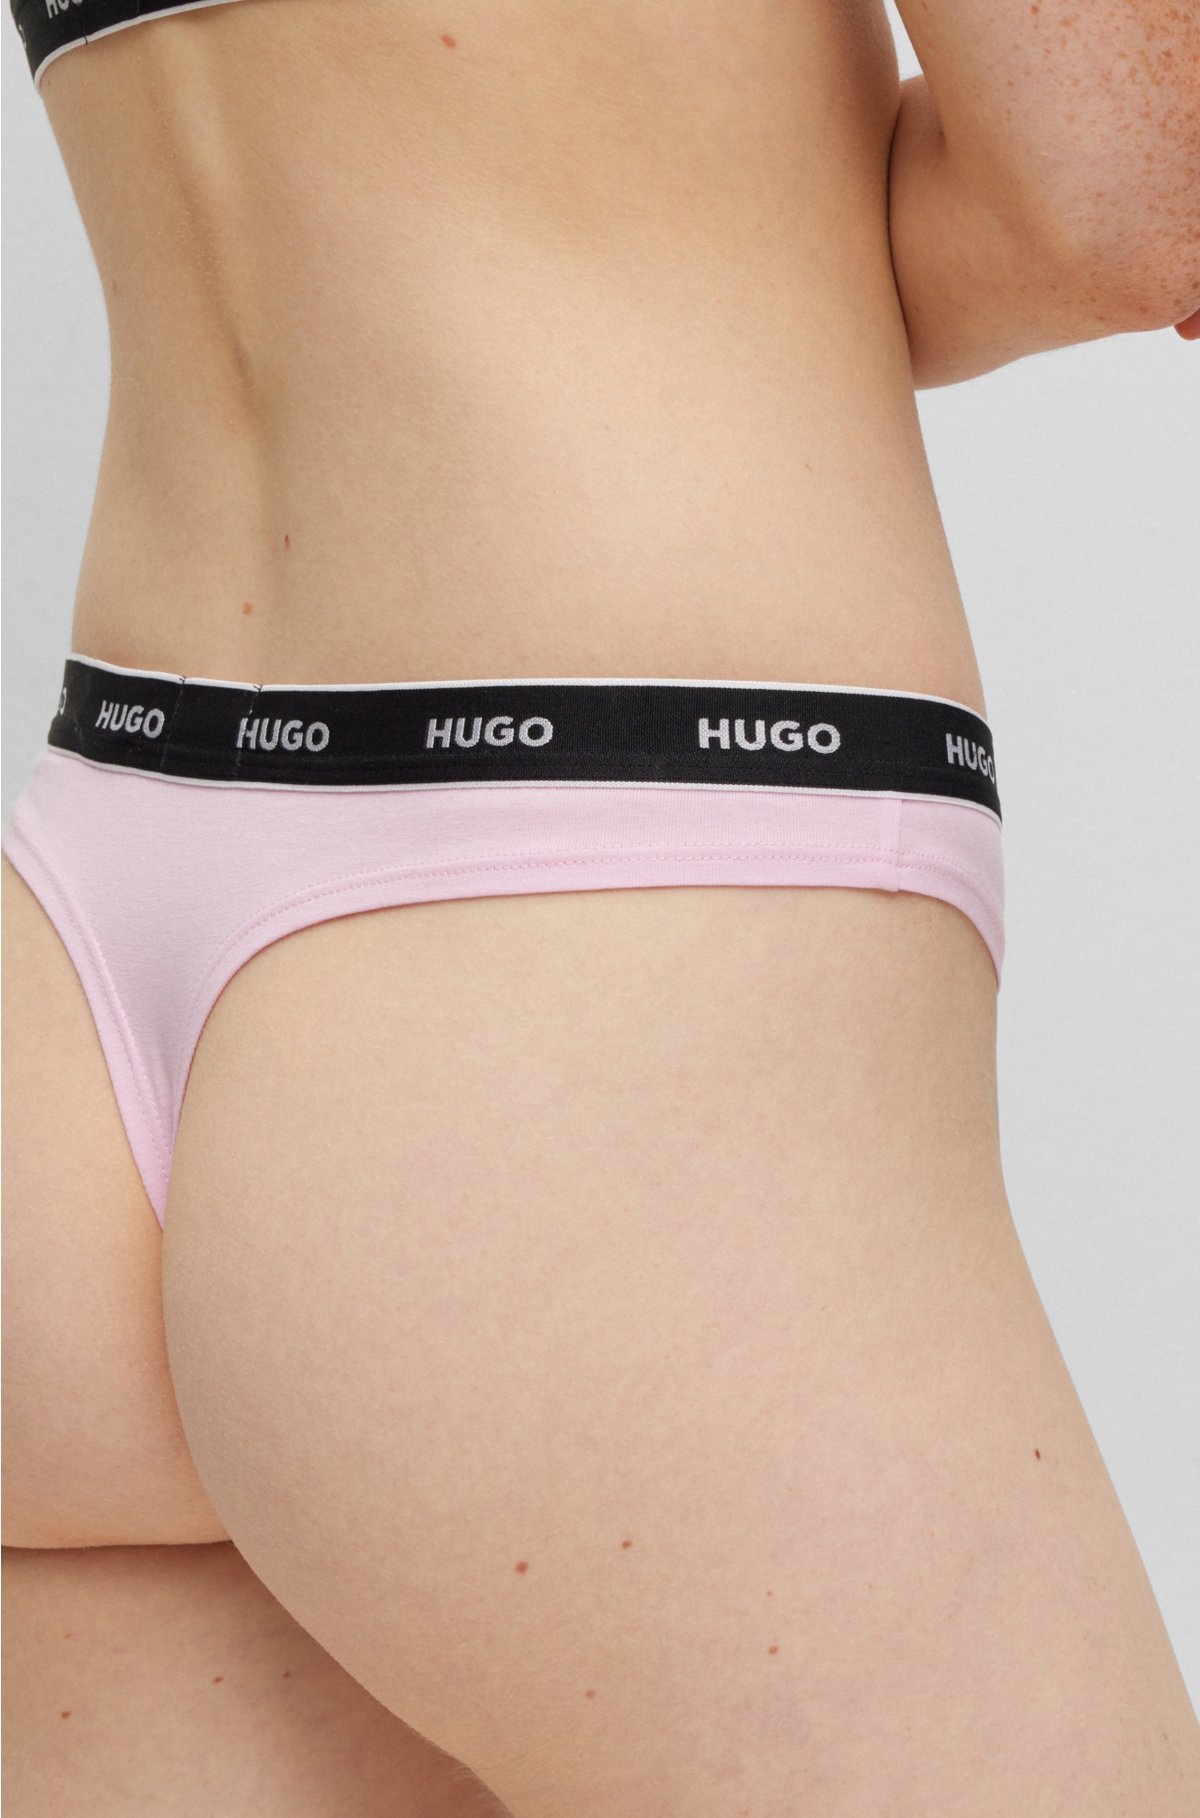 HUGO - Stretch-cotton string waistband with briefs logo